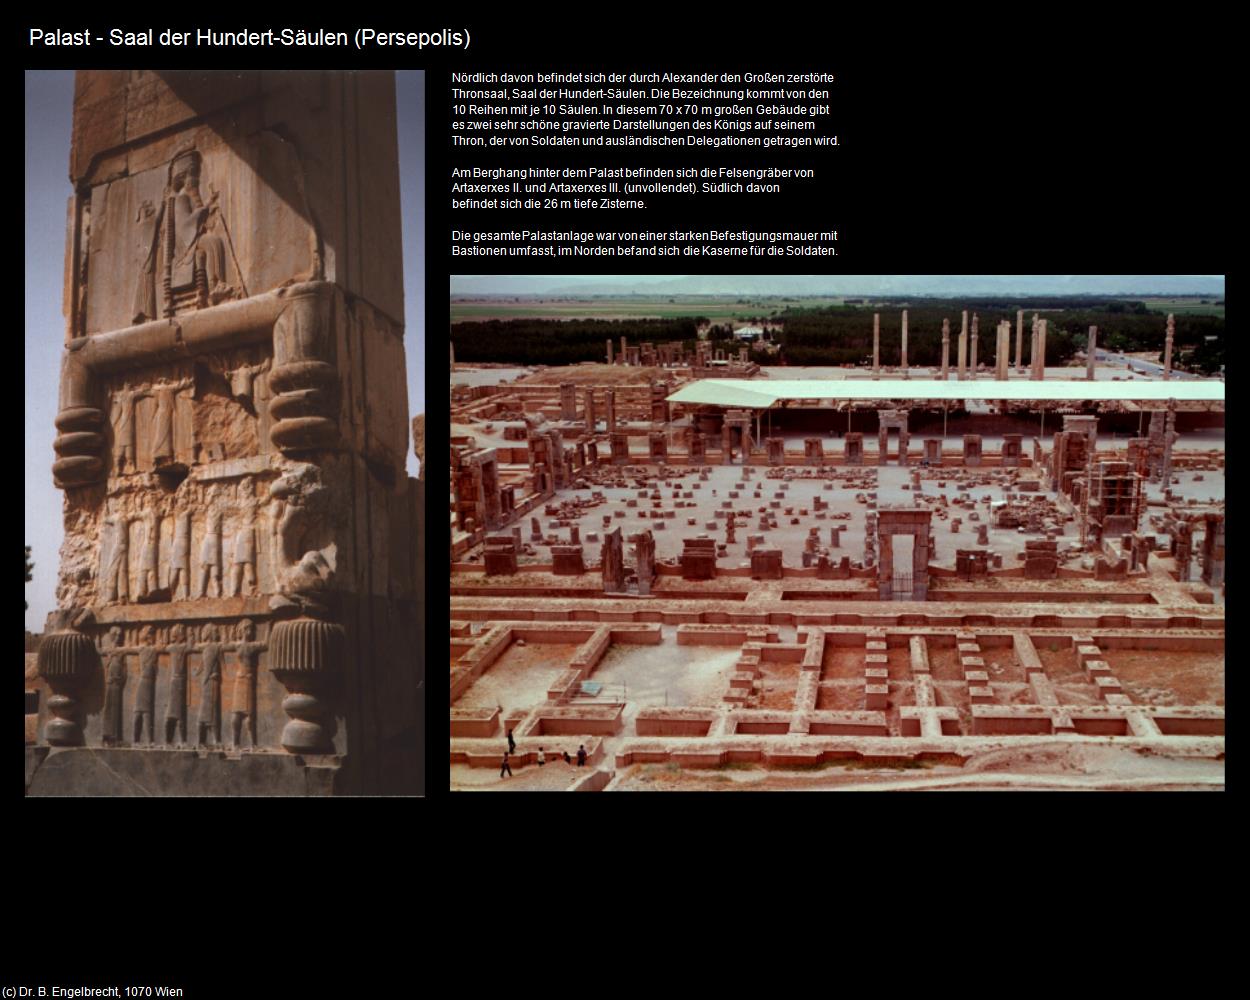 Palast - Saal der 100 Säulen (Persepolis) in Iran